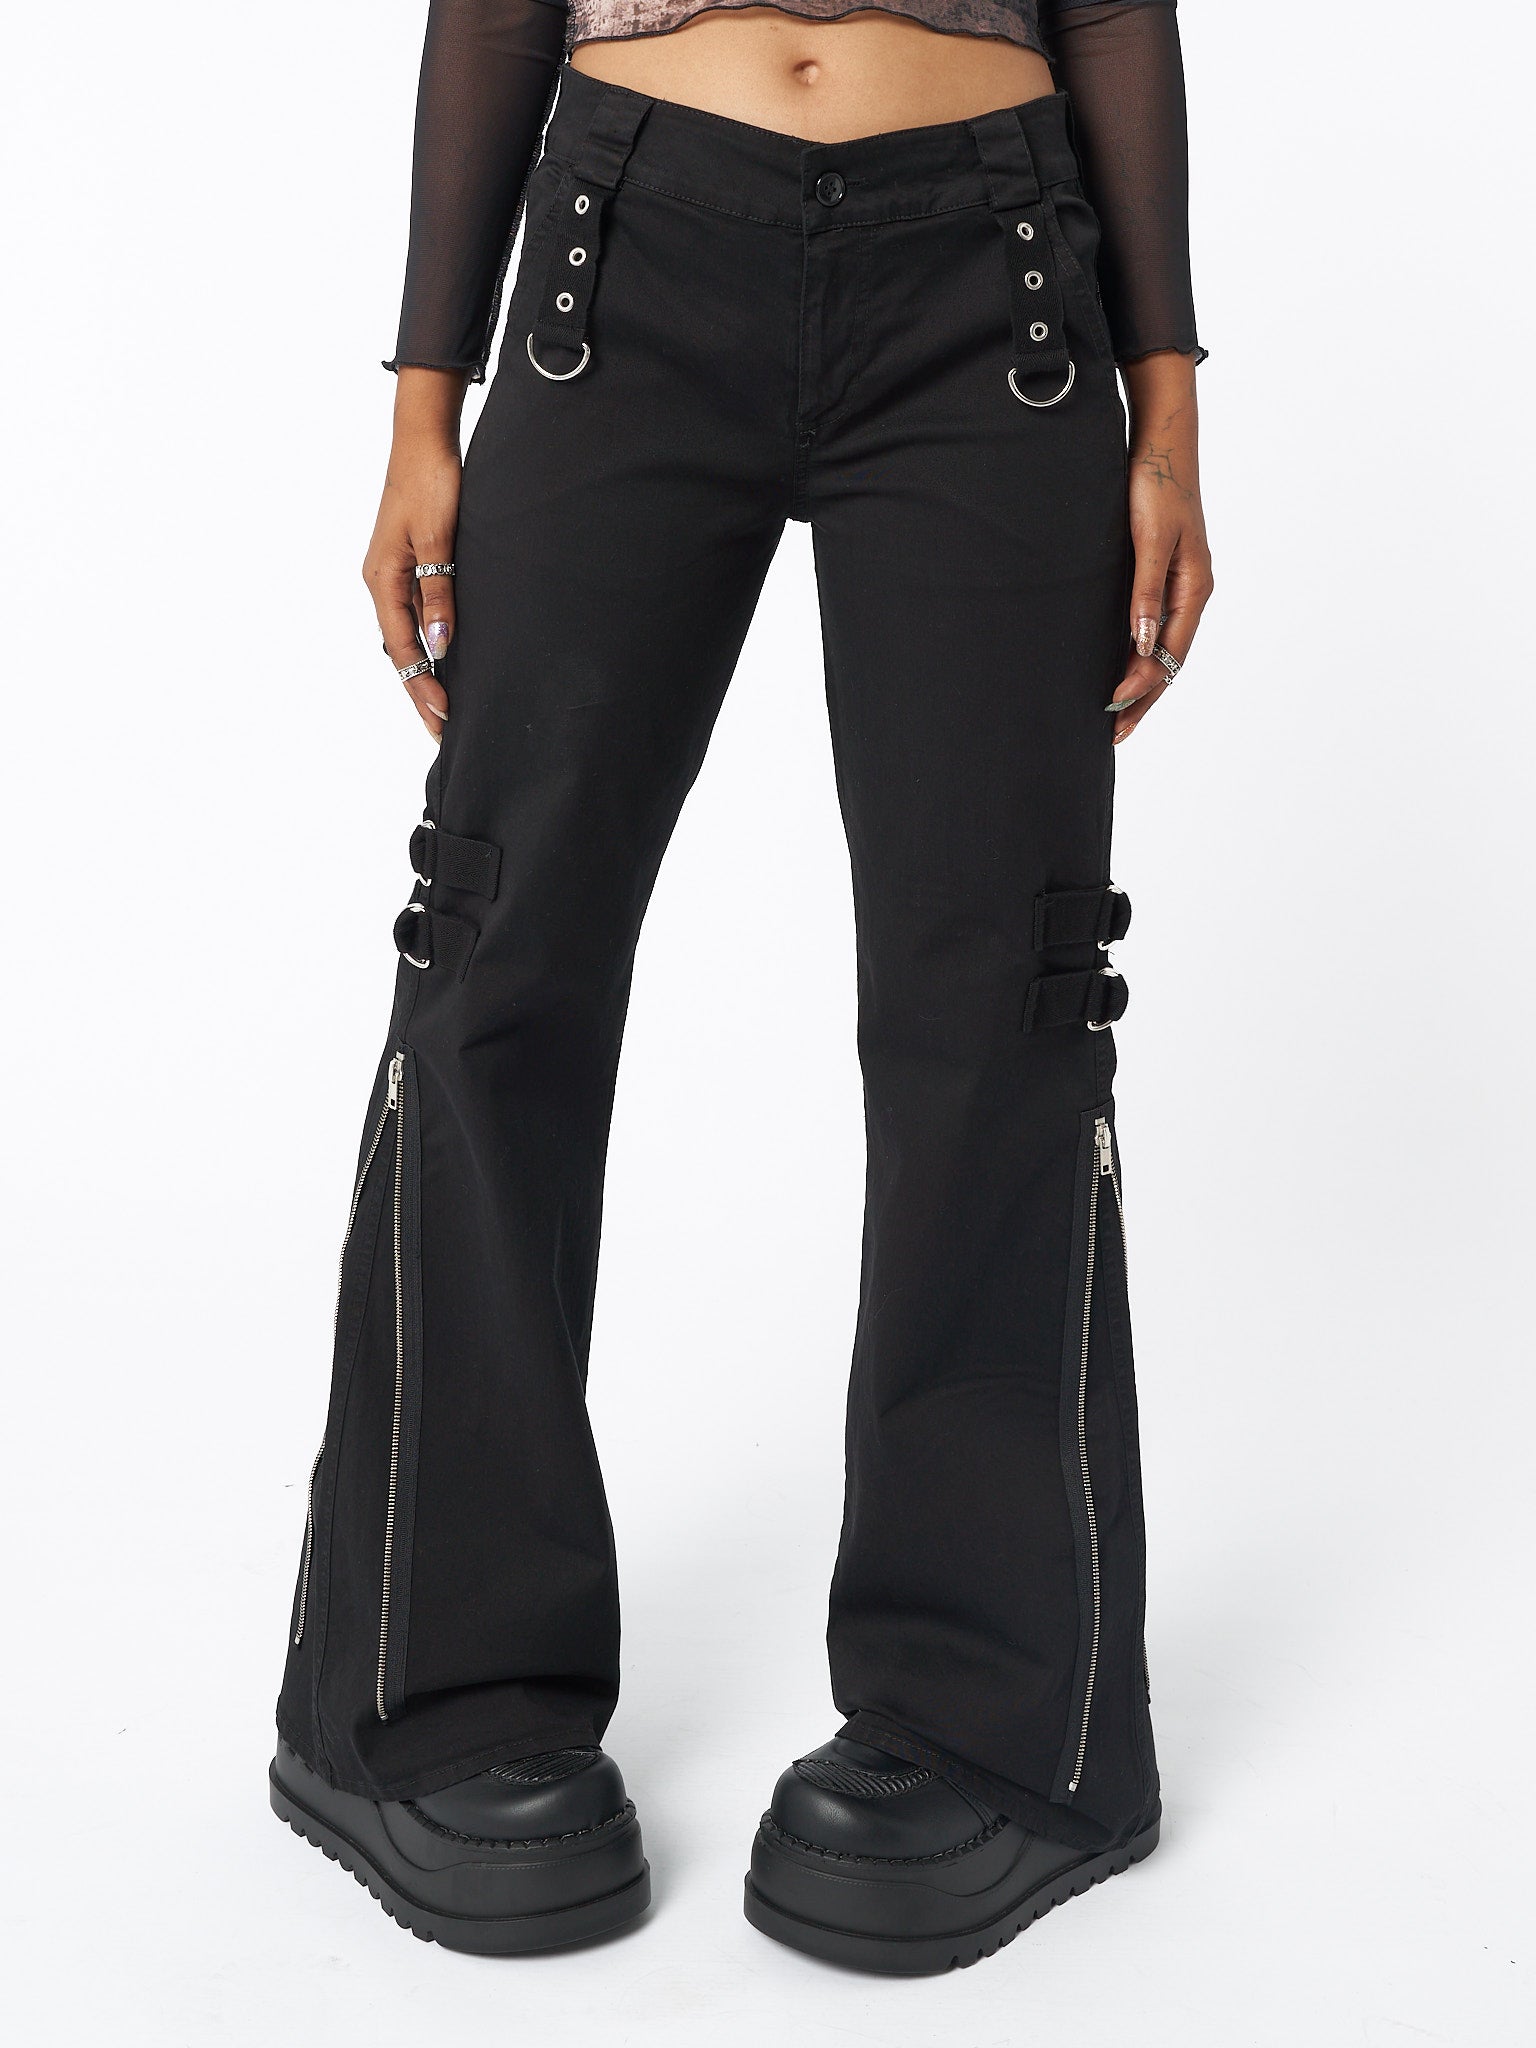 Tripp Black & Grey Overdyed Zip-Off Pants